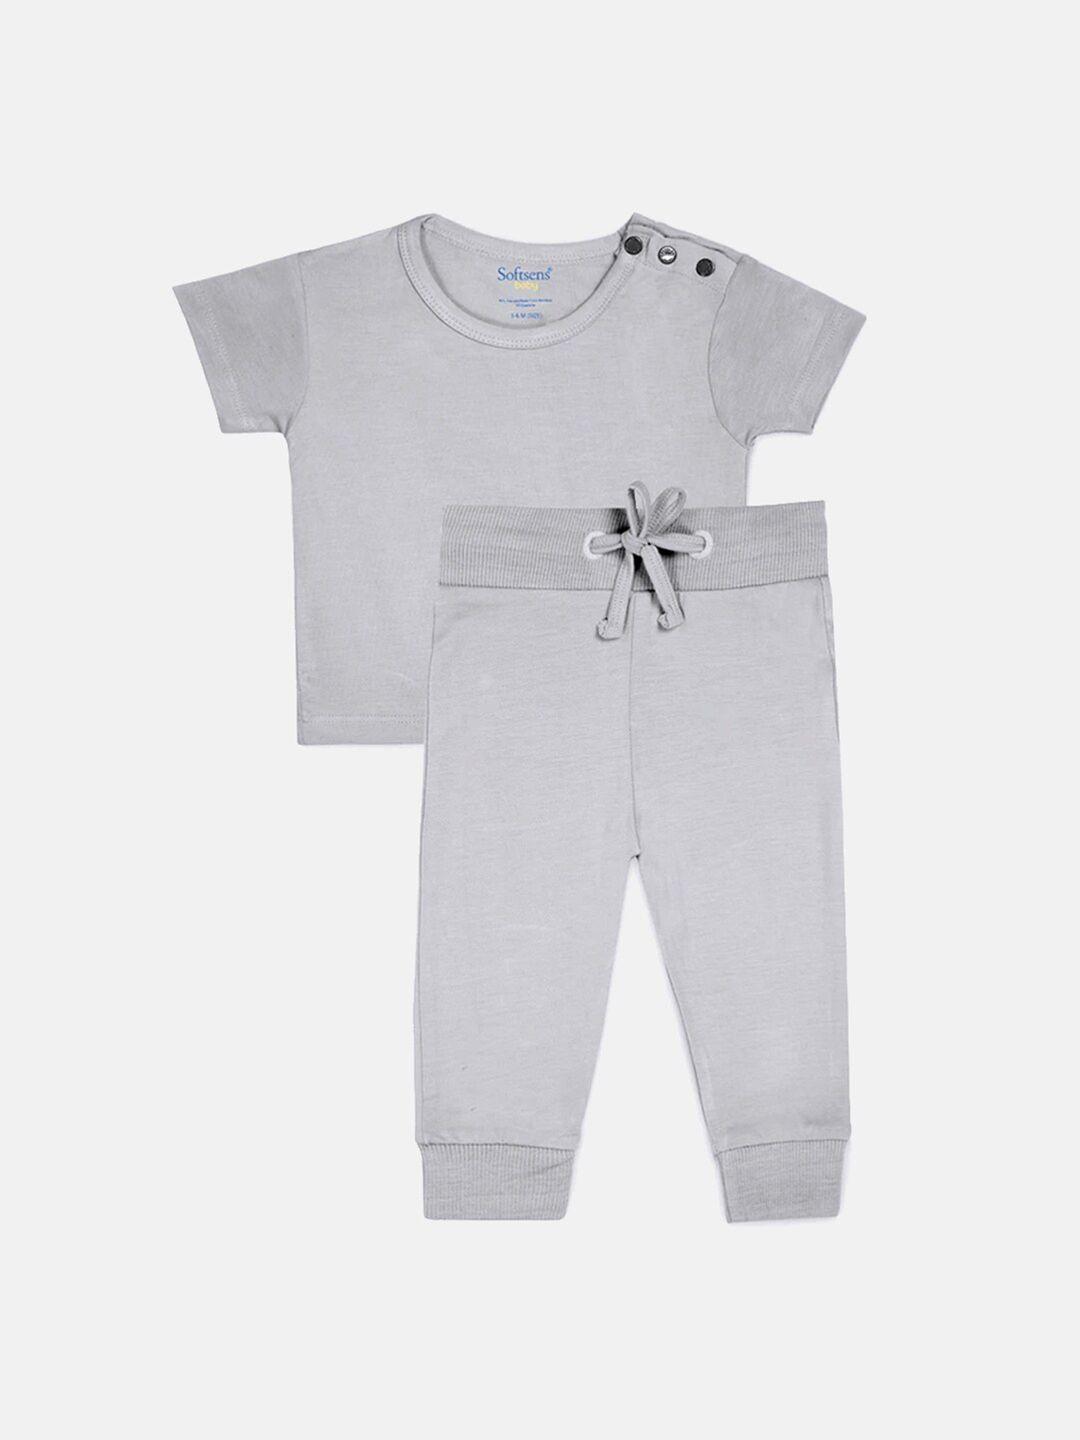 softsens kids grey solid bamboo top with pyjamas